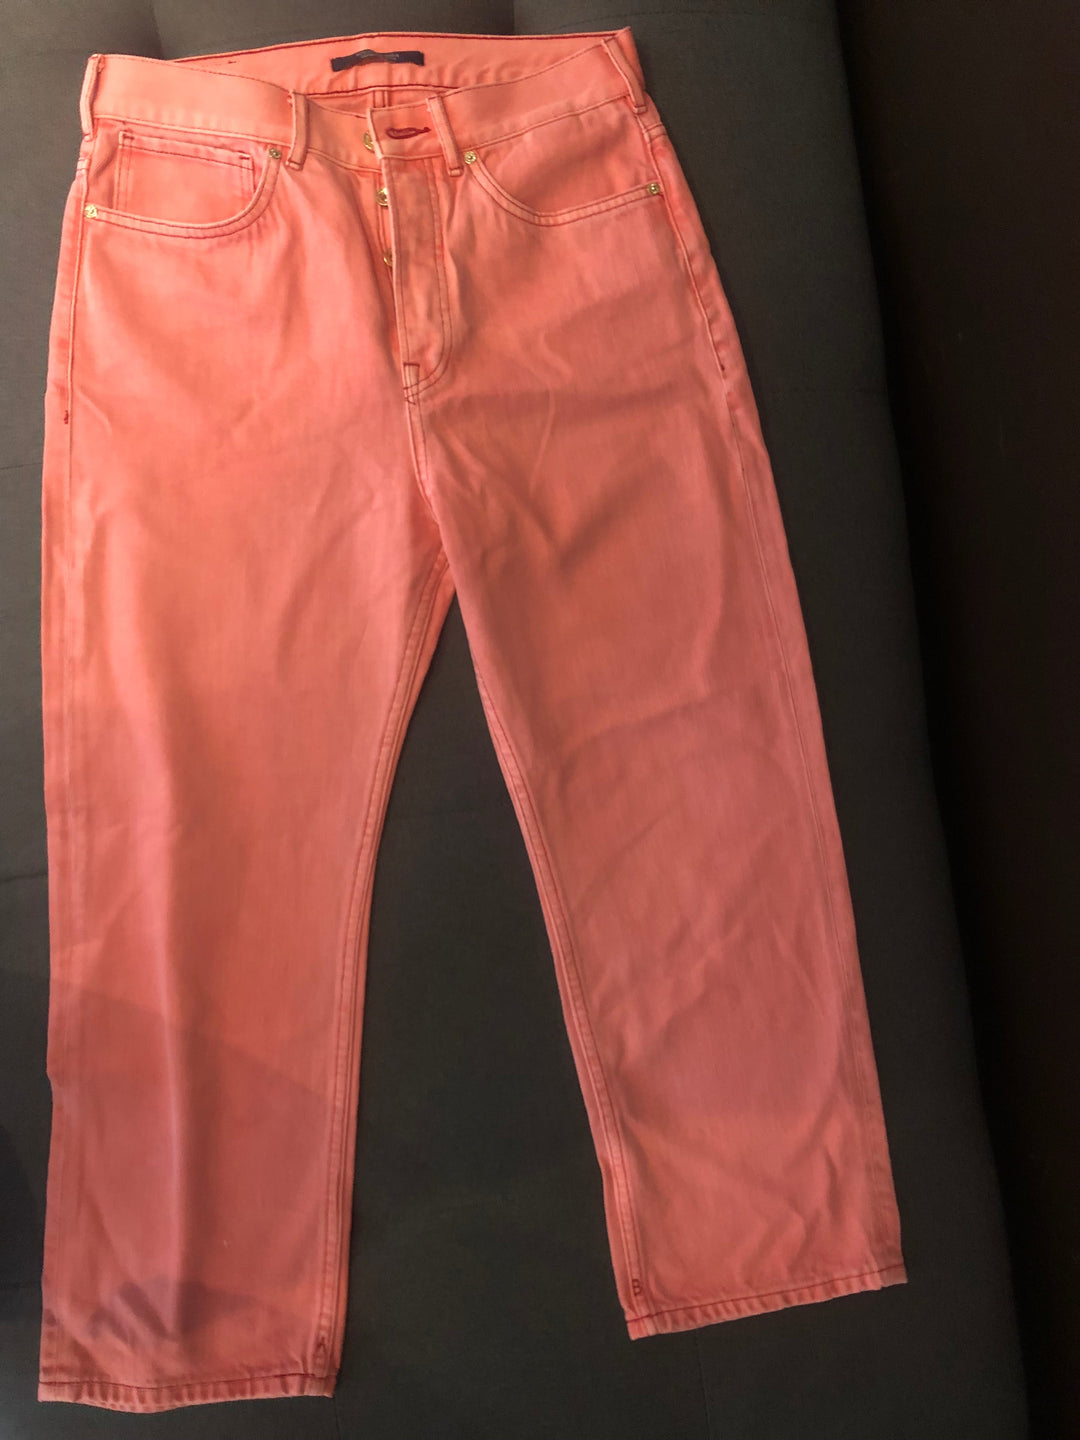 Image of Pink Denim Pants